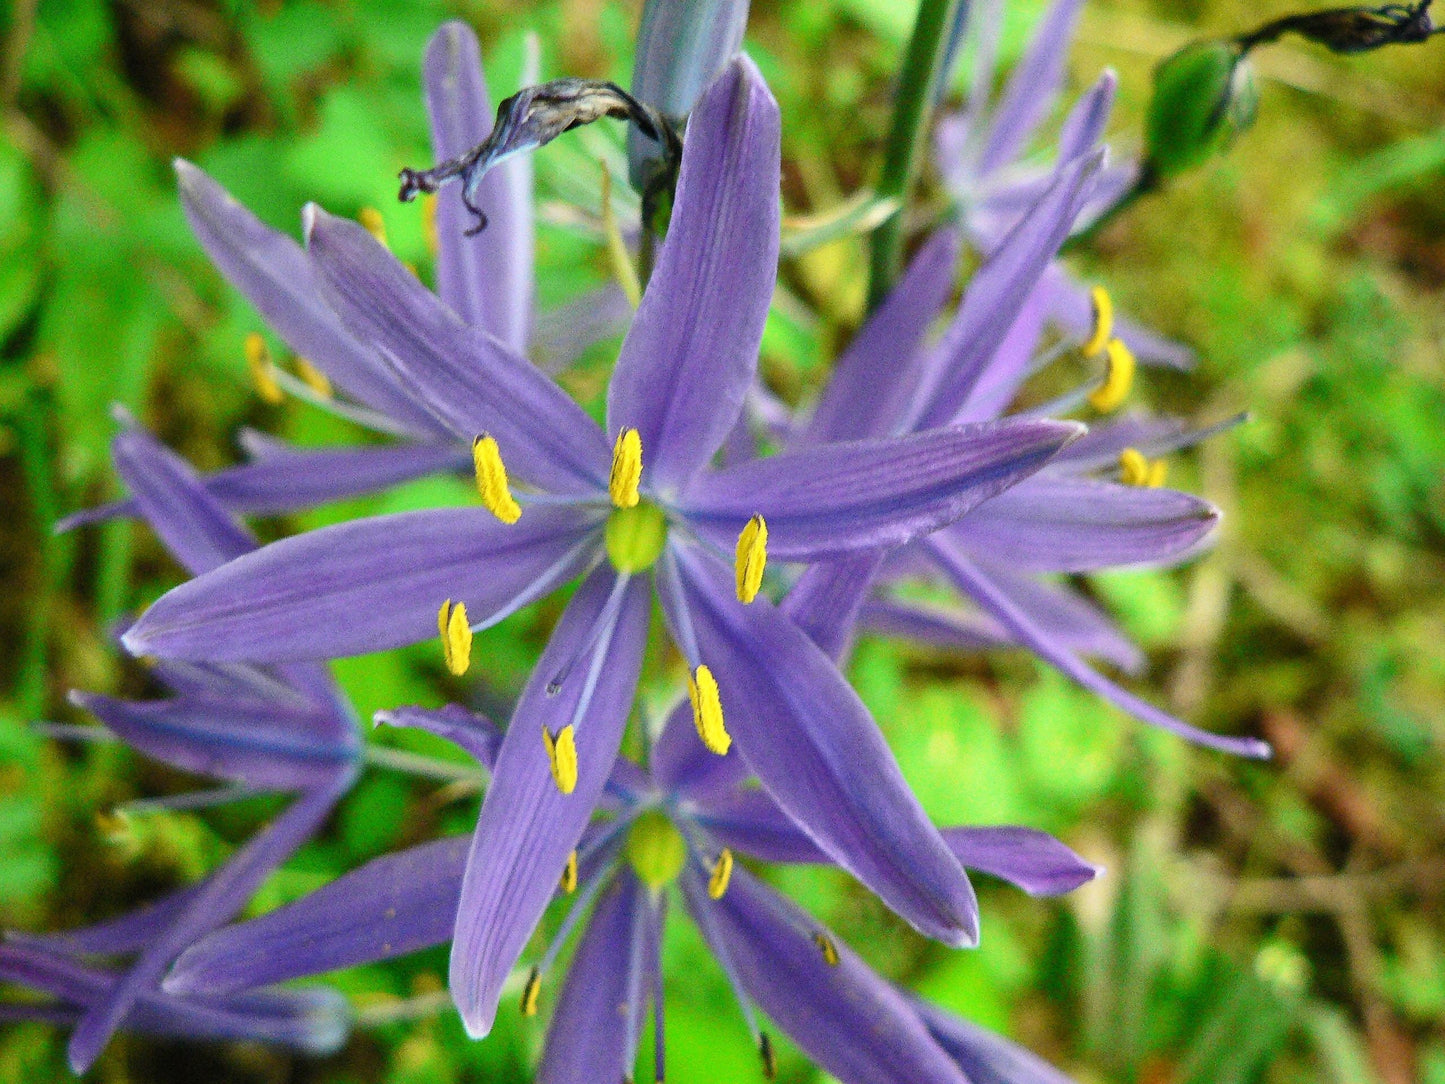 30 BLUE CAMAS Camass Lily Wild Indian Hyacinth Camassia Quamash Flower Herb Seeds